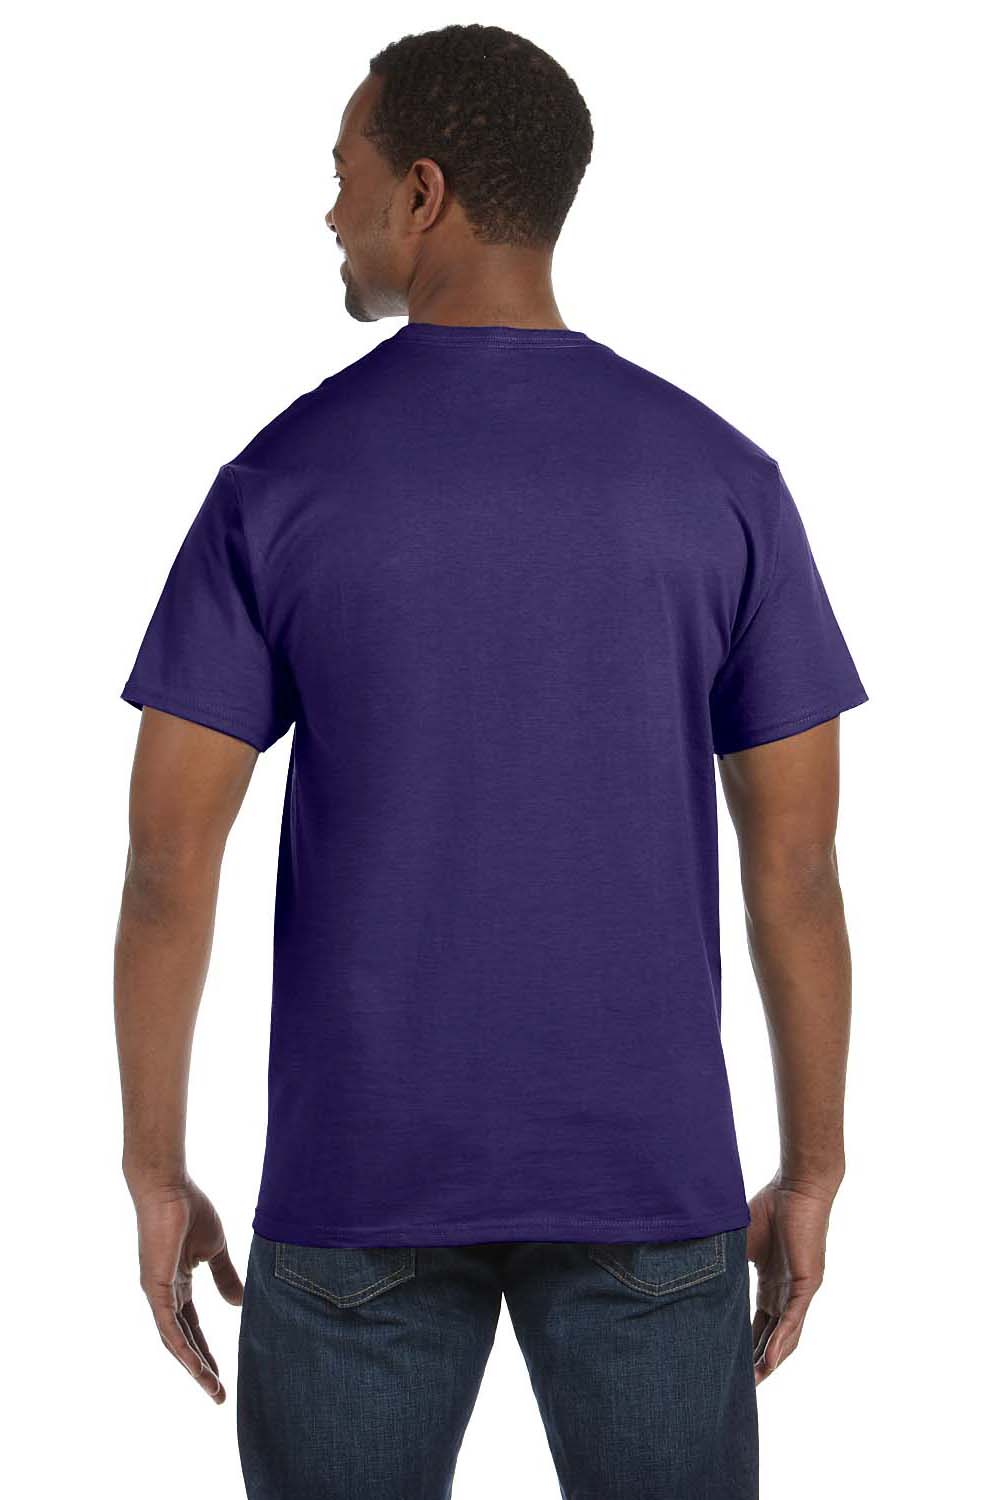 Jerzees 29M Mens Dri-Power Moisture Wicking Short Sleeve Crewneck T-Shirt Purple Back